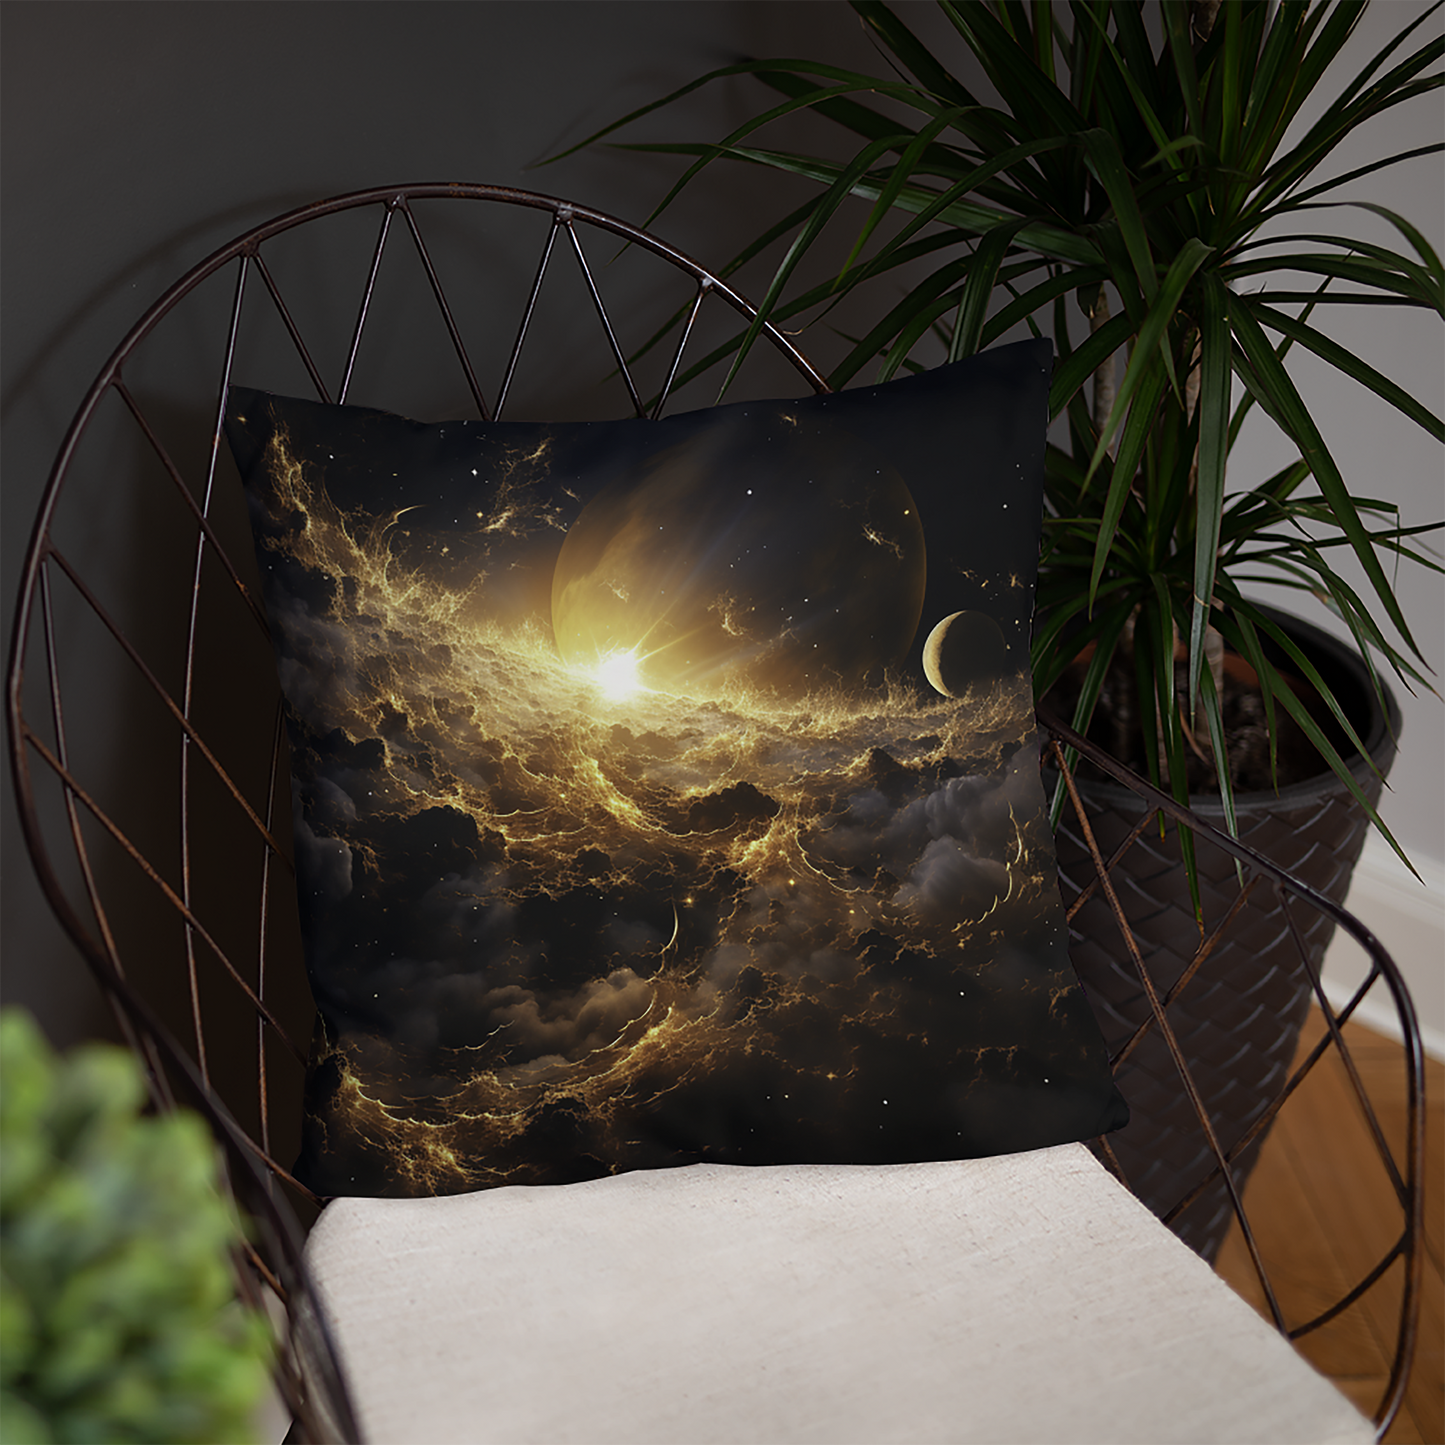 Space Throw Pillow Golden Harmony Celestial Polyester Decorative Cushion 18x18